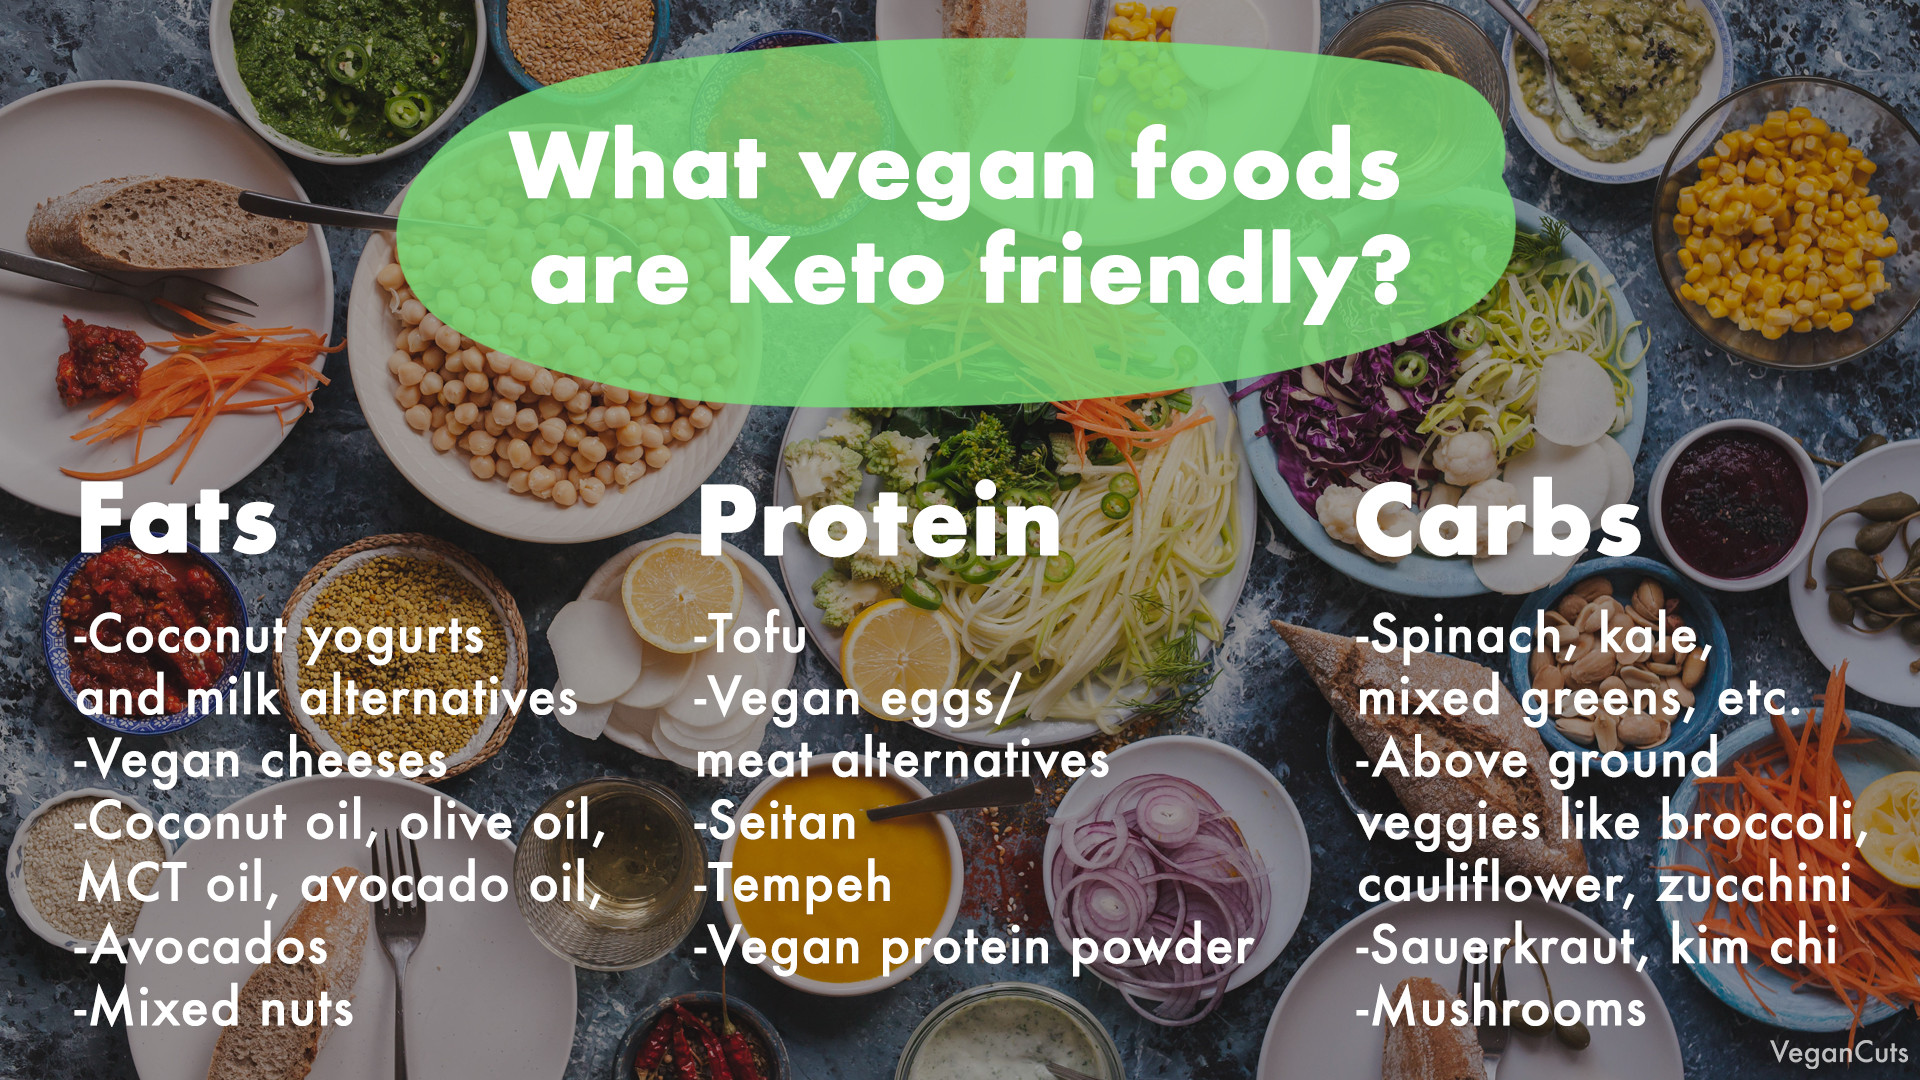 Keto Diet for Vegans Beautiful the Vegan Keto Diet Explained Vegan Cuts